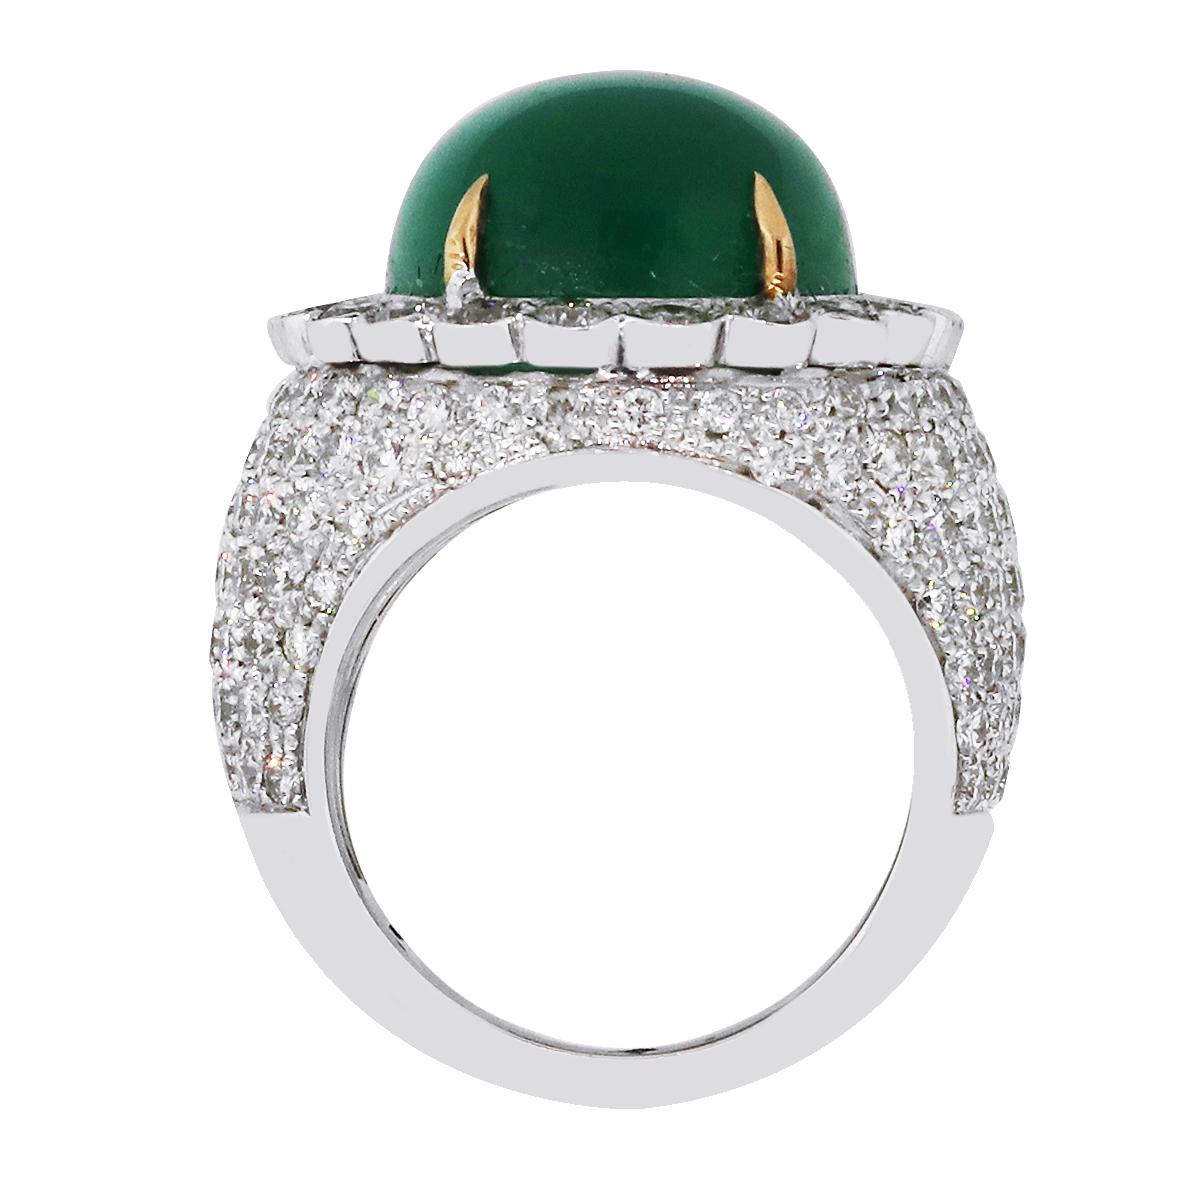 Round Cut 15 Carat Emerald Cocktail Ring